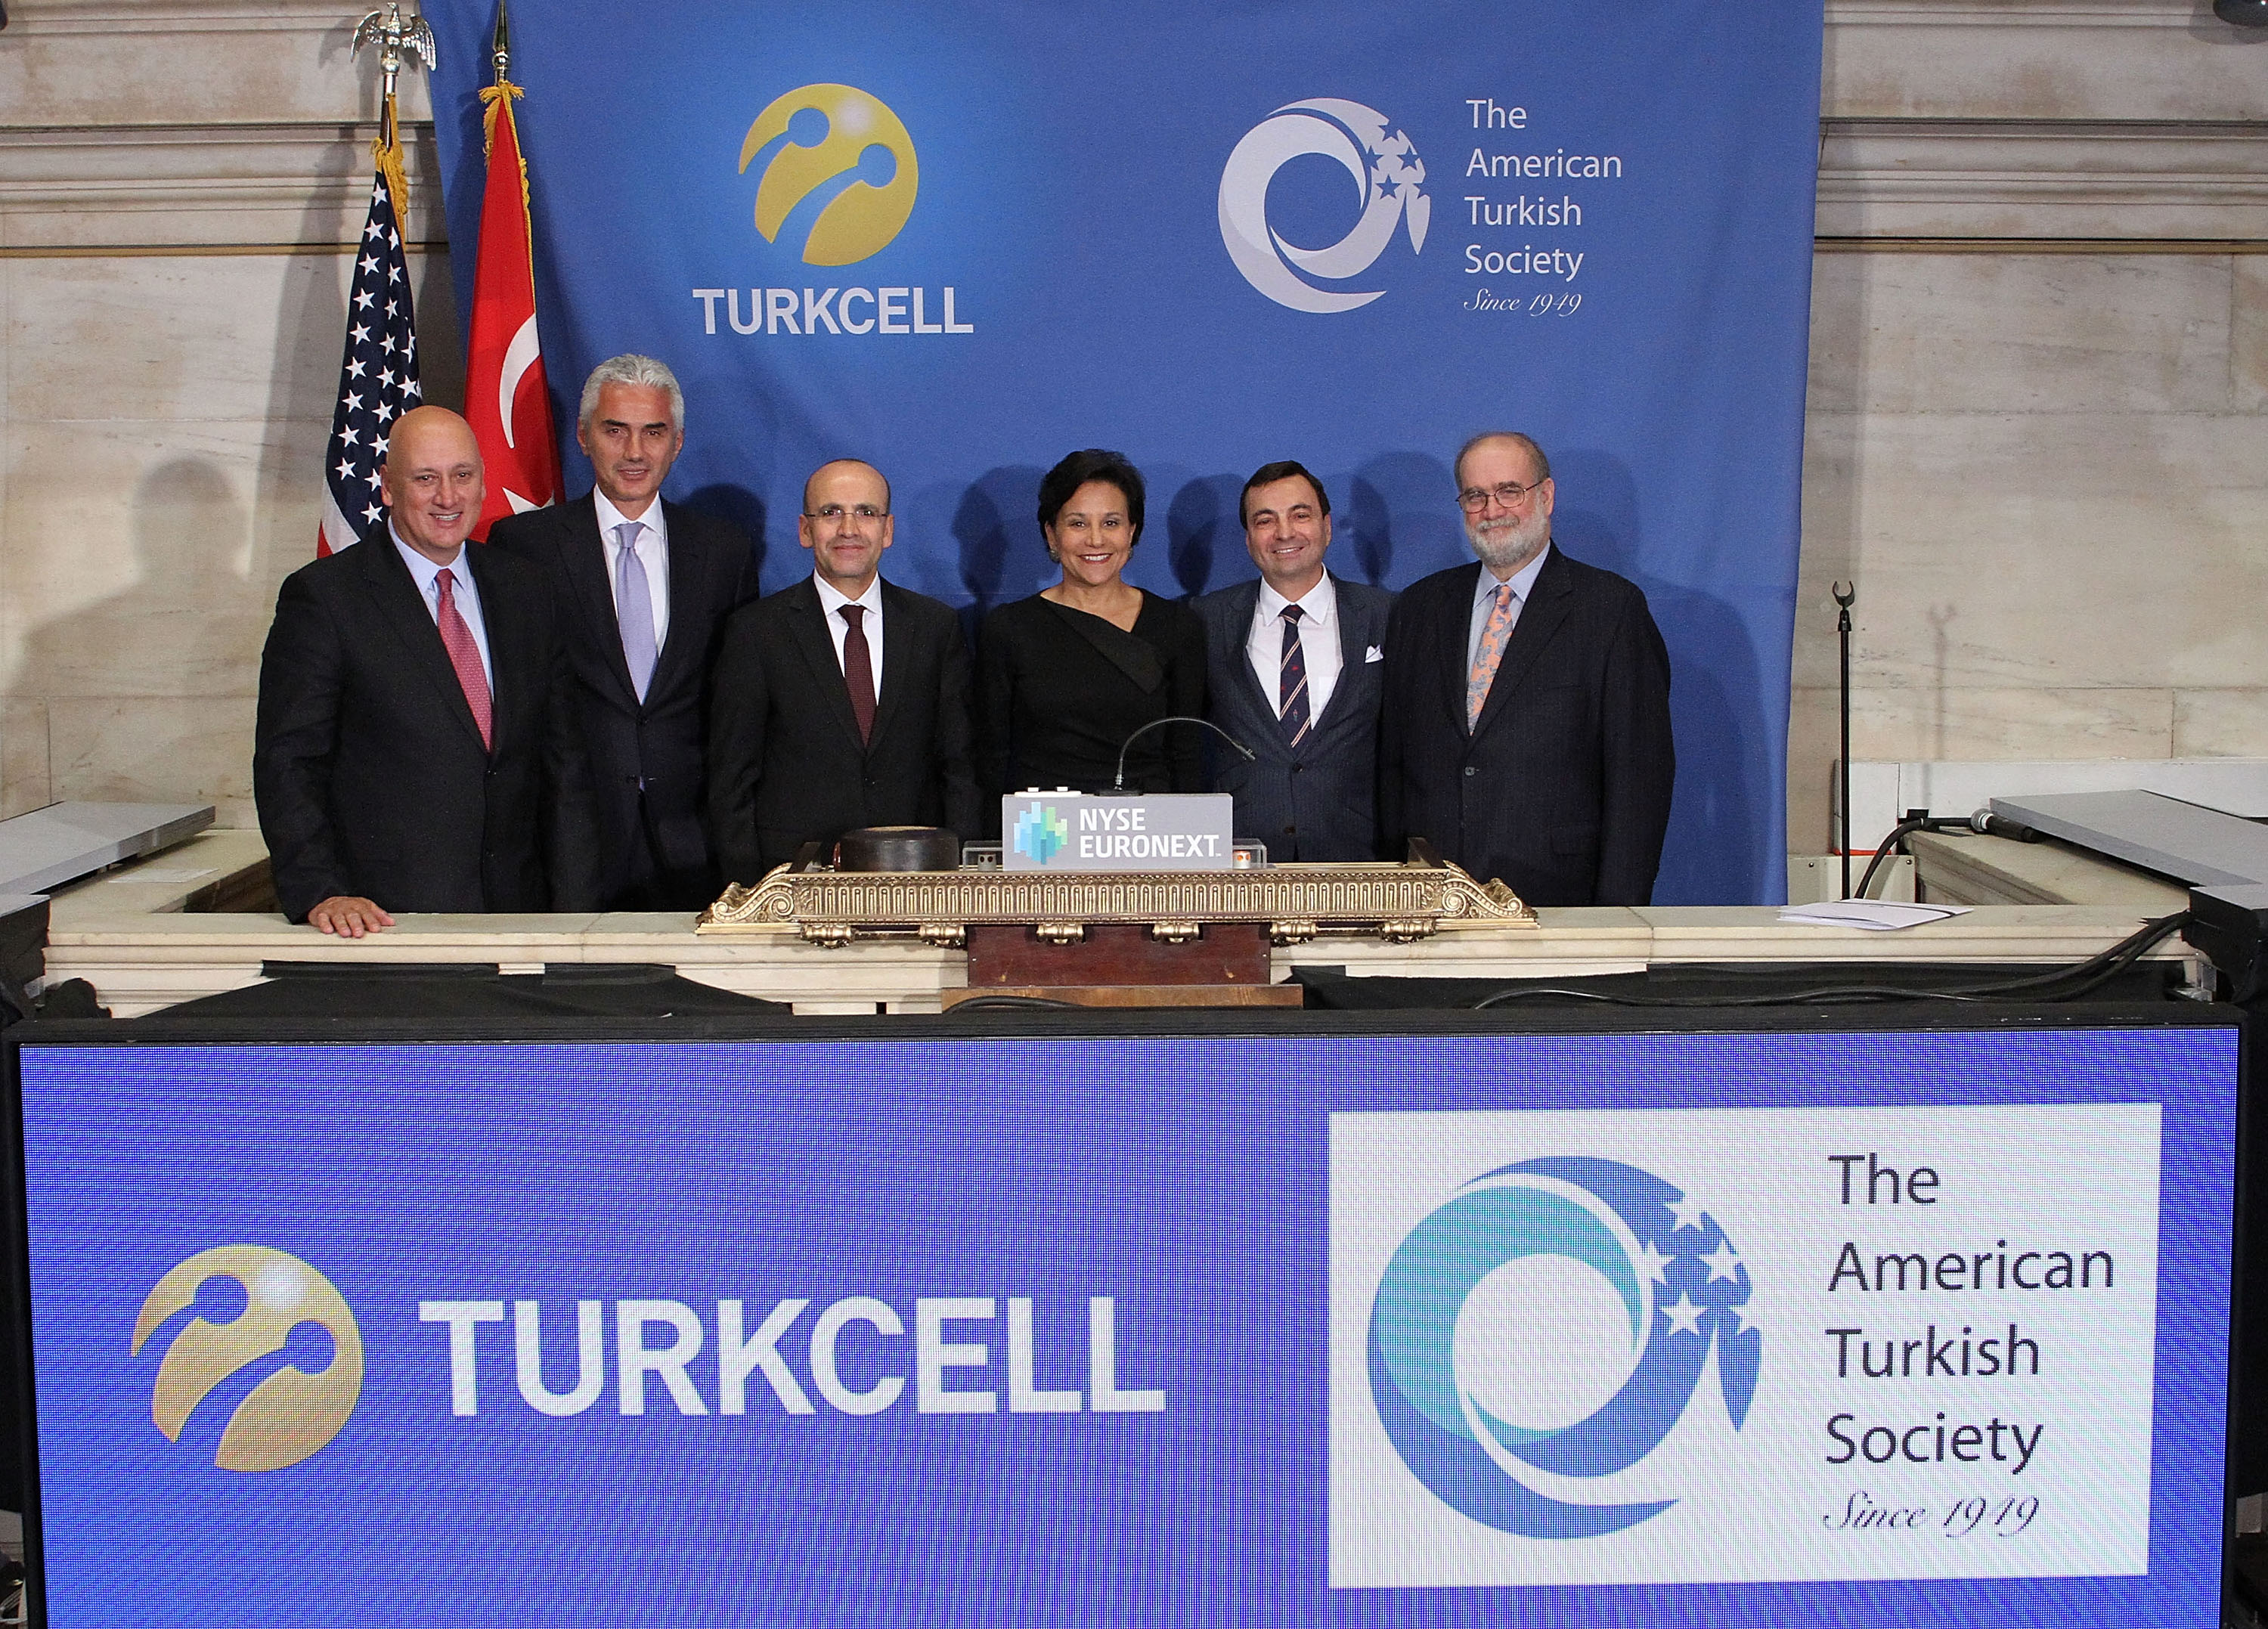 Turkcell CEO Sureyya Ciliv, ATS Board Member Haluk Dincer, Turkish Finance Minister Mehmet Simsek, U.S. Commerce Secretary Penny Pritzker, ATS Chairman Murat Koprulu, ATS Board Member Lawrence Kaye